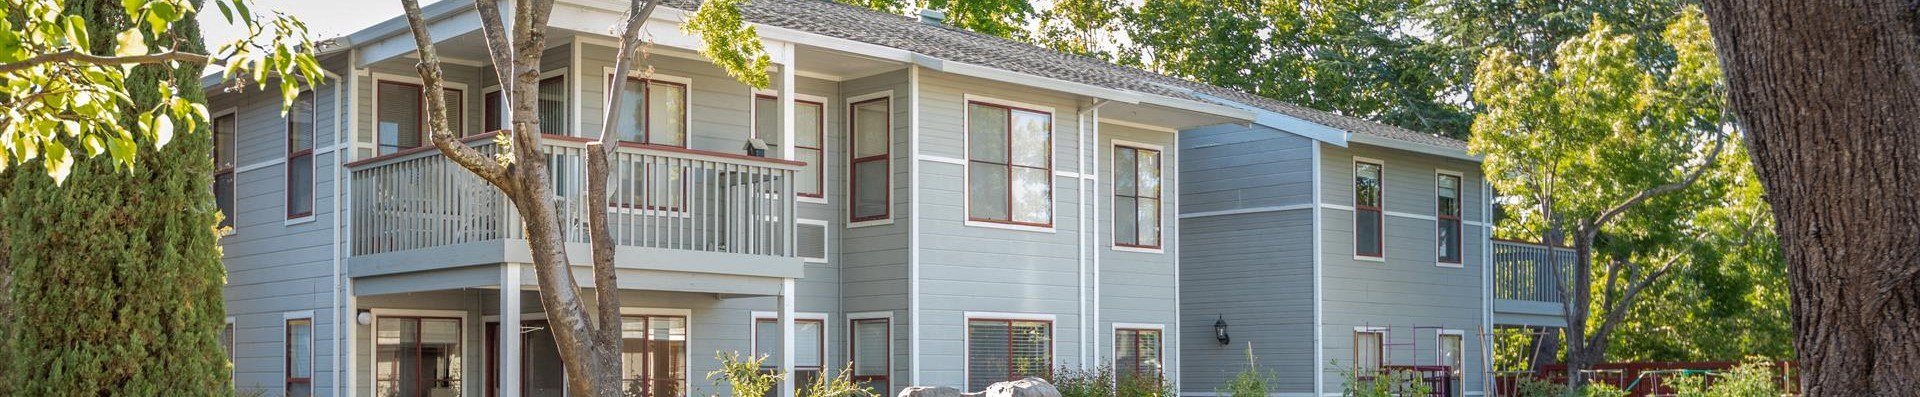 Property Exterior at Cogir of Sonoma, Sonoma, CA